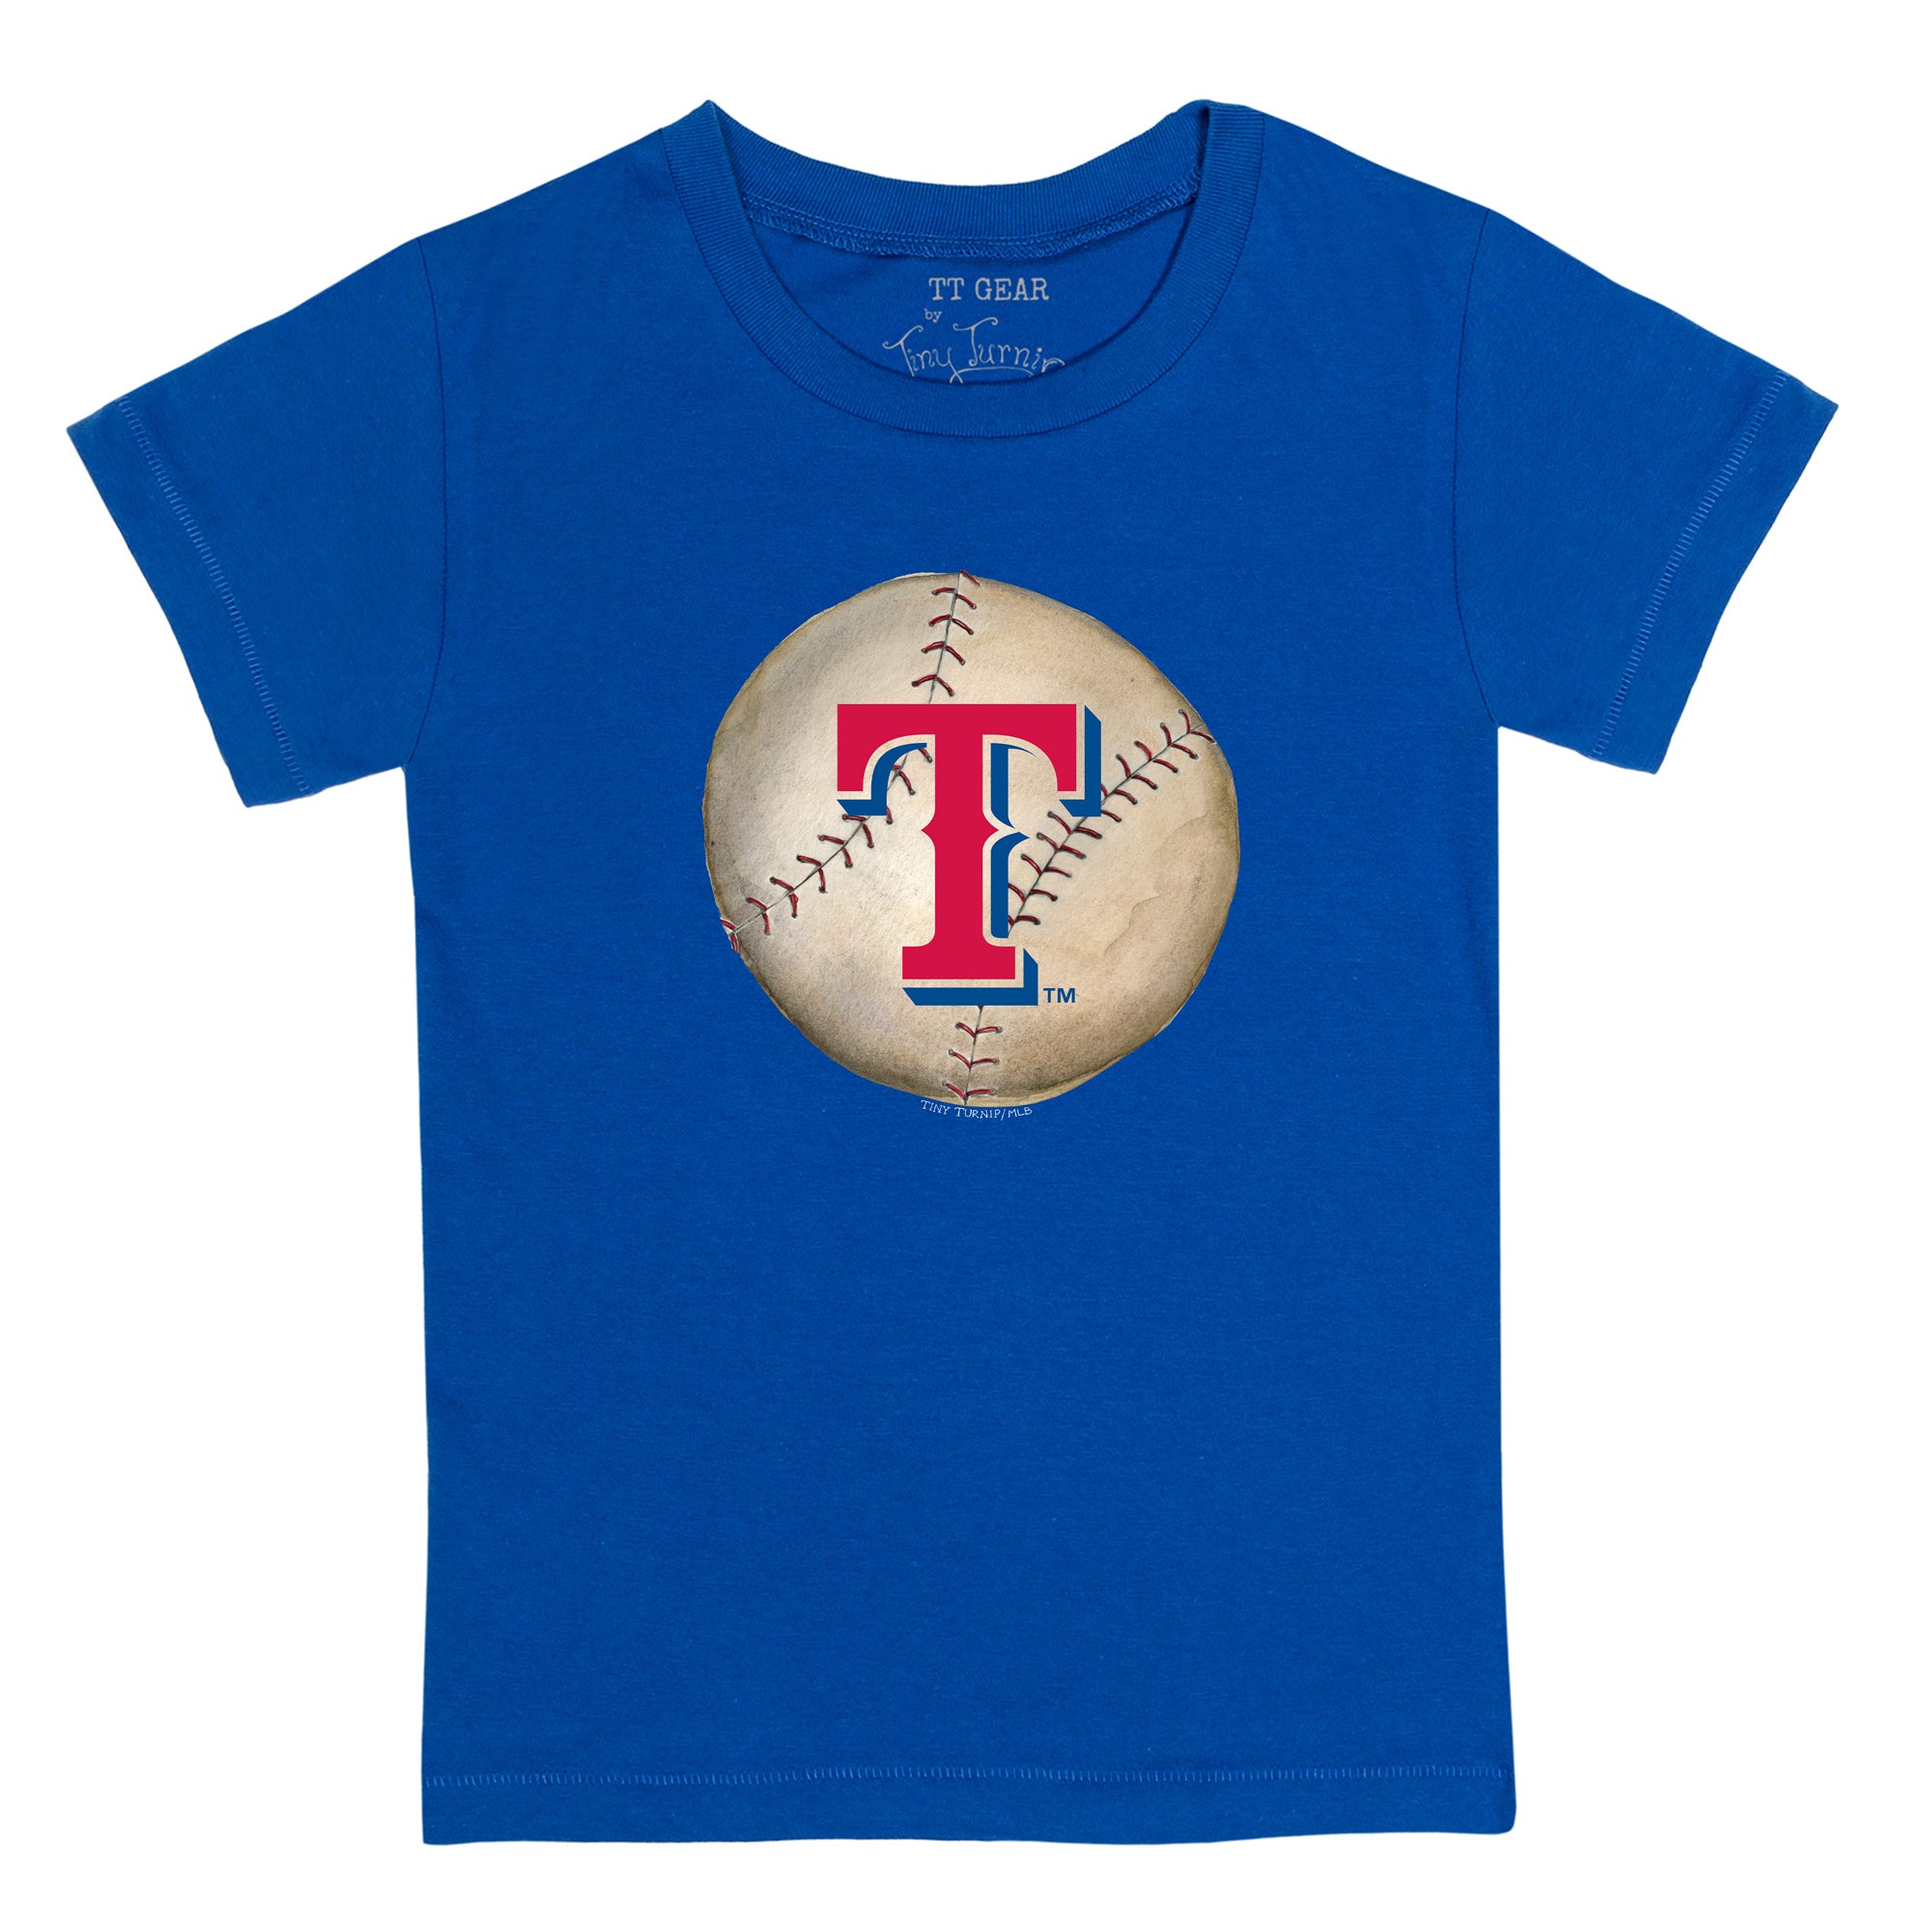 Texas Rangers Gear, Rangers Merchandise, Rangers Apparel, Store